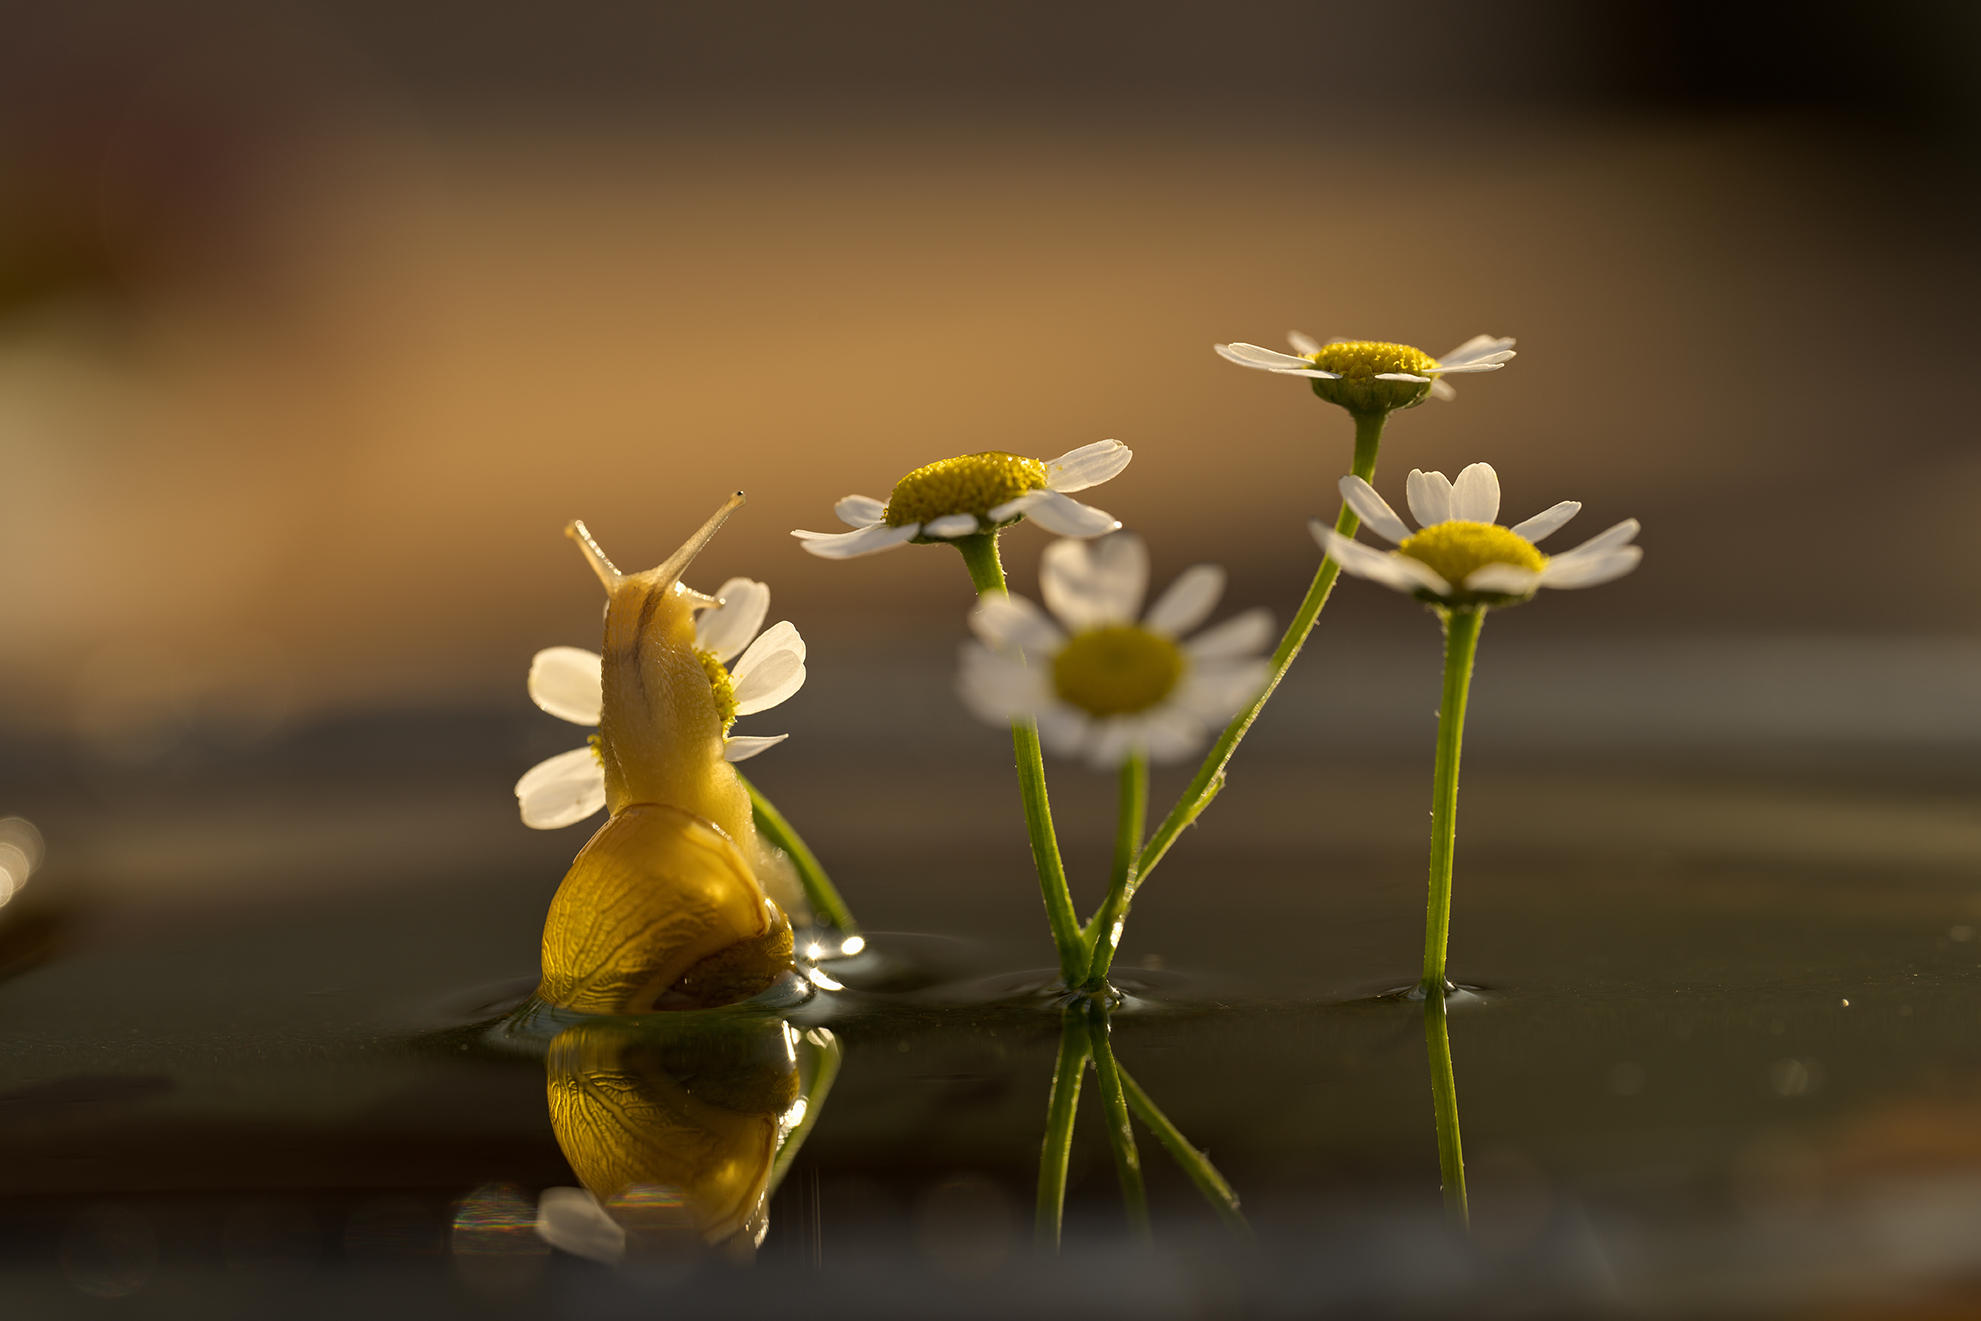 Snail climbing flowers in water taken on a NIKKOR Z MC 105mm f2.8 VR S Lens